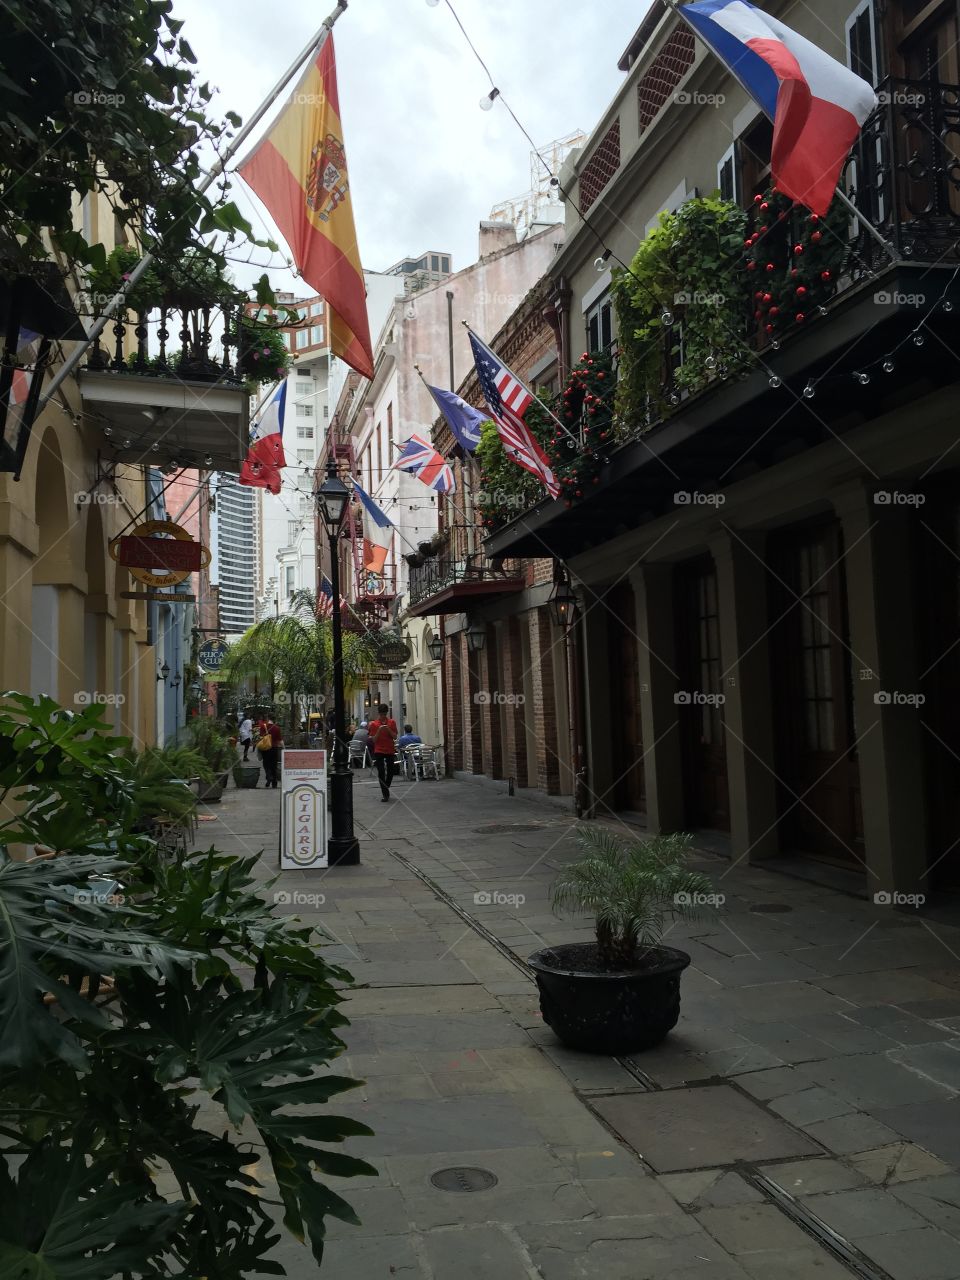 Flags waving in a sweet little New Orleans alleyway 